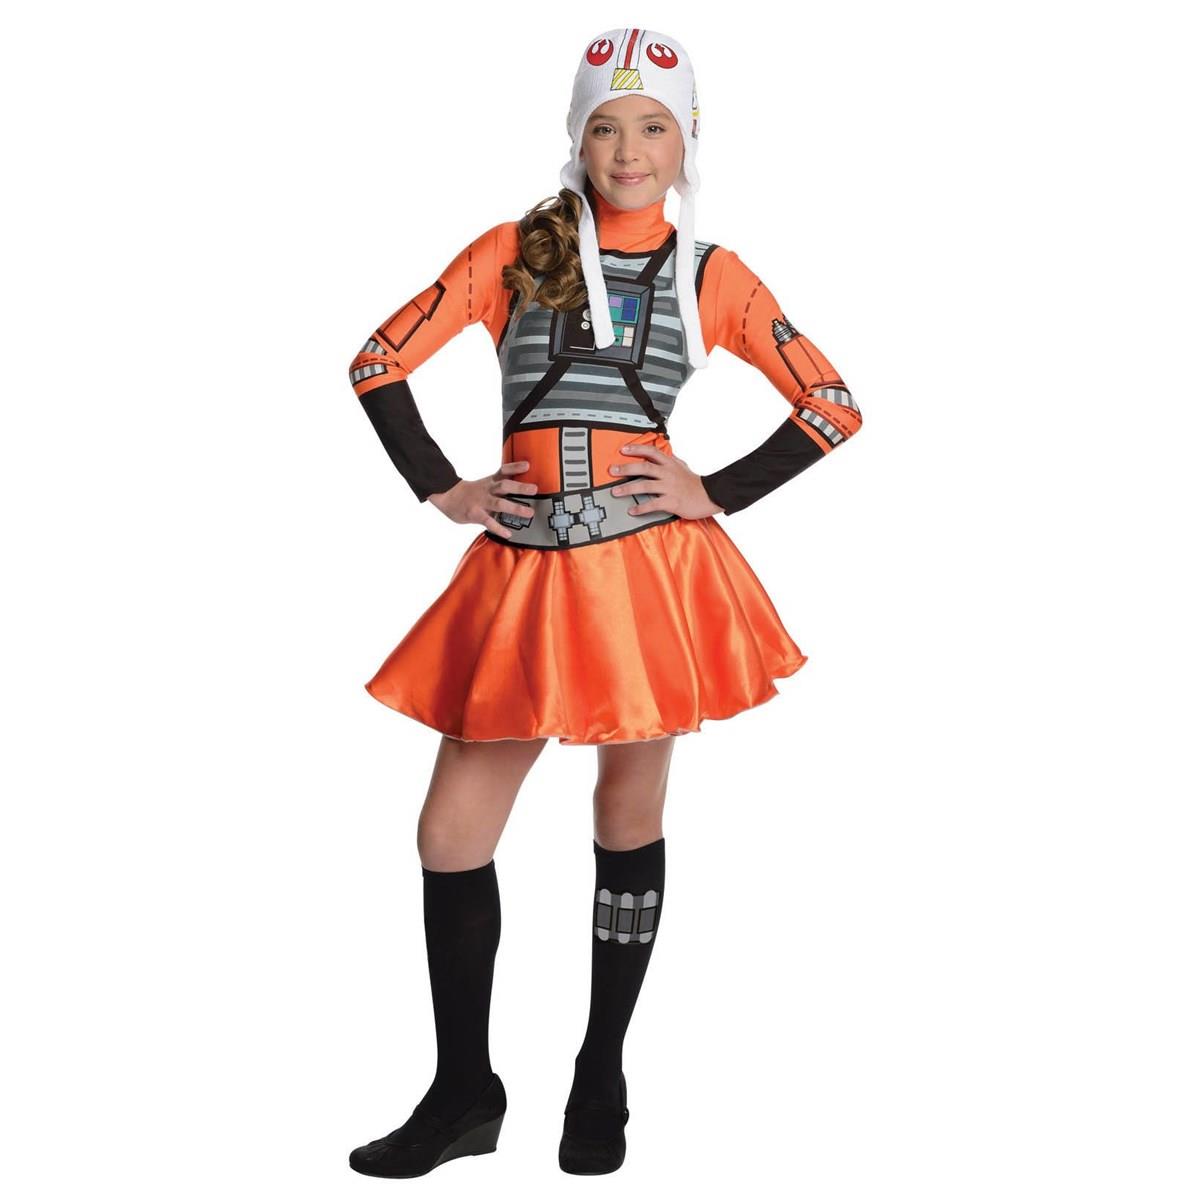 284274 Star Wars Girls X-wing Fighter Girl Costume, Medium